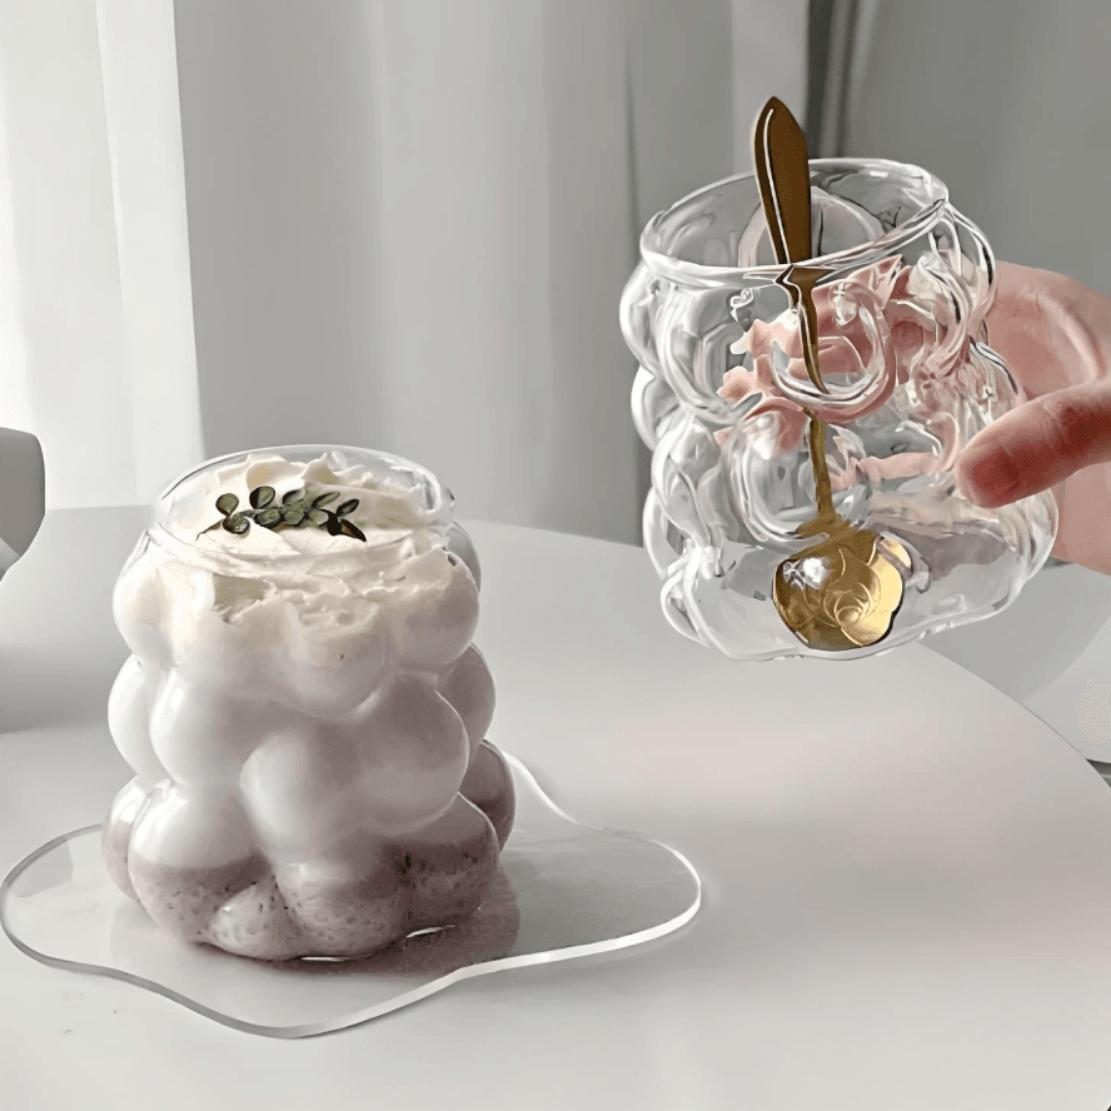 Bubble drinking glass with yogurt